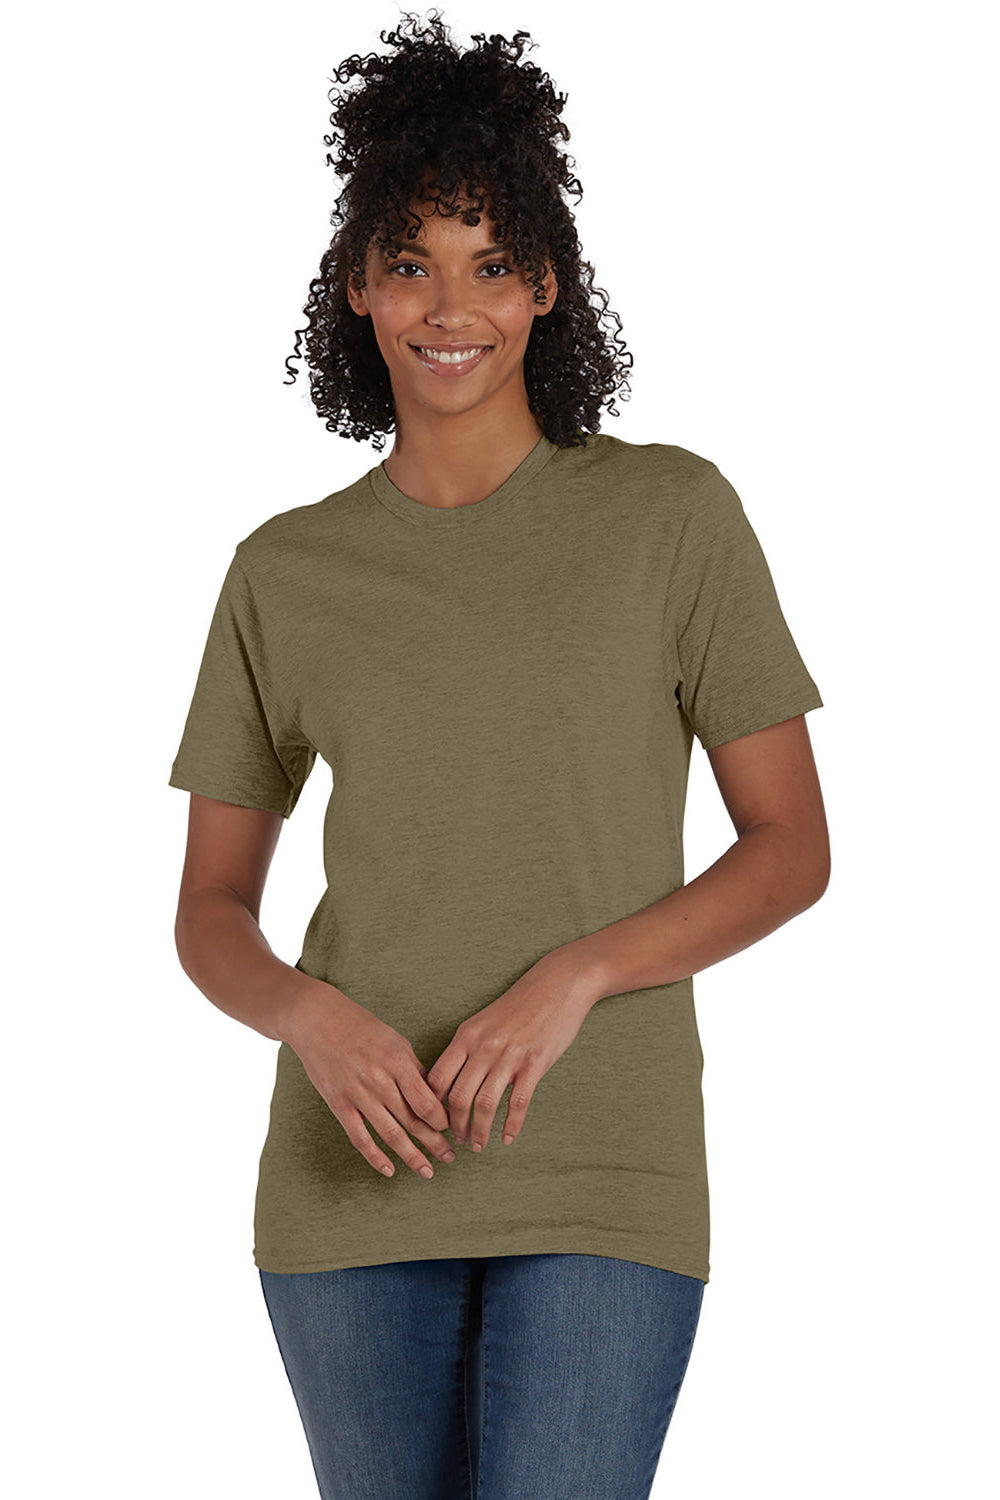 Hanes 4980 Mens Nano-T Short Sleeve Crewneck T-Shirt Heather Oregano Front